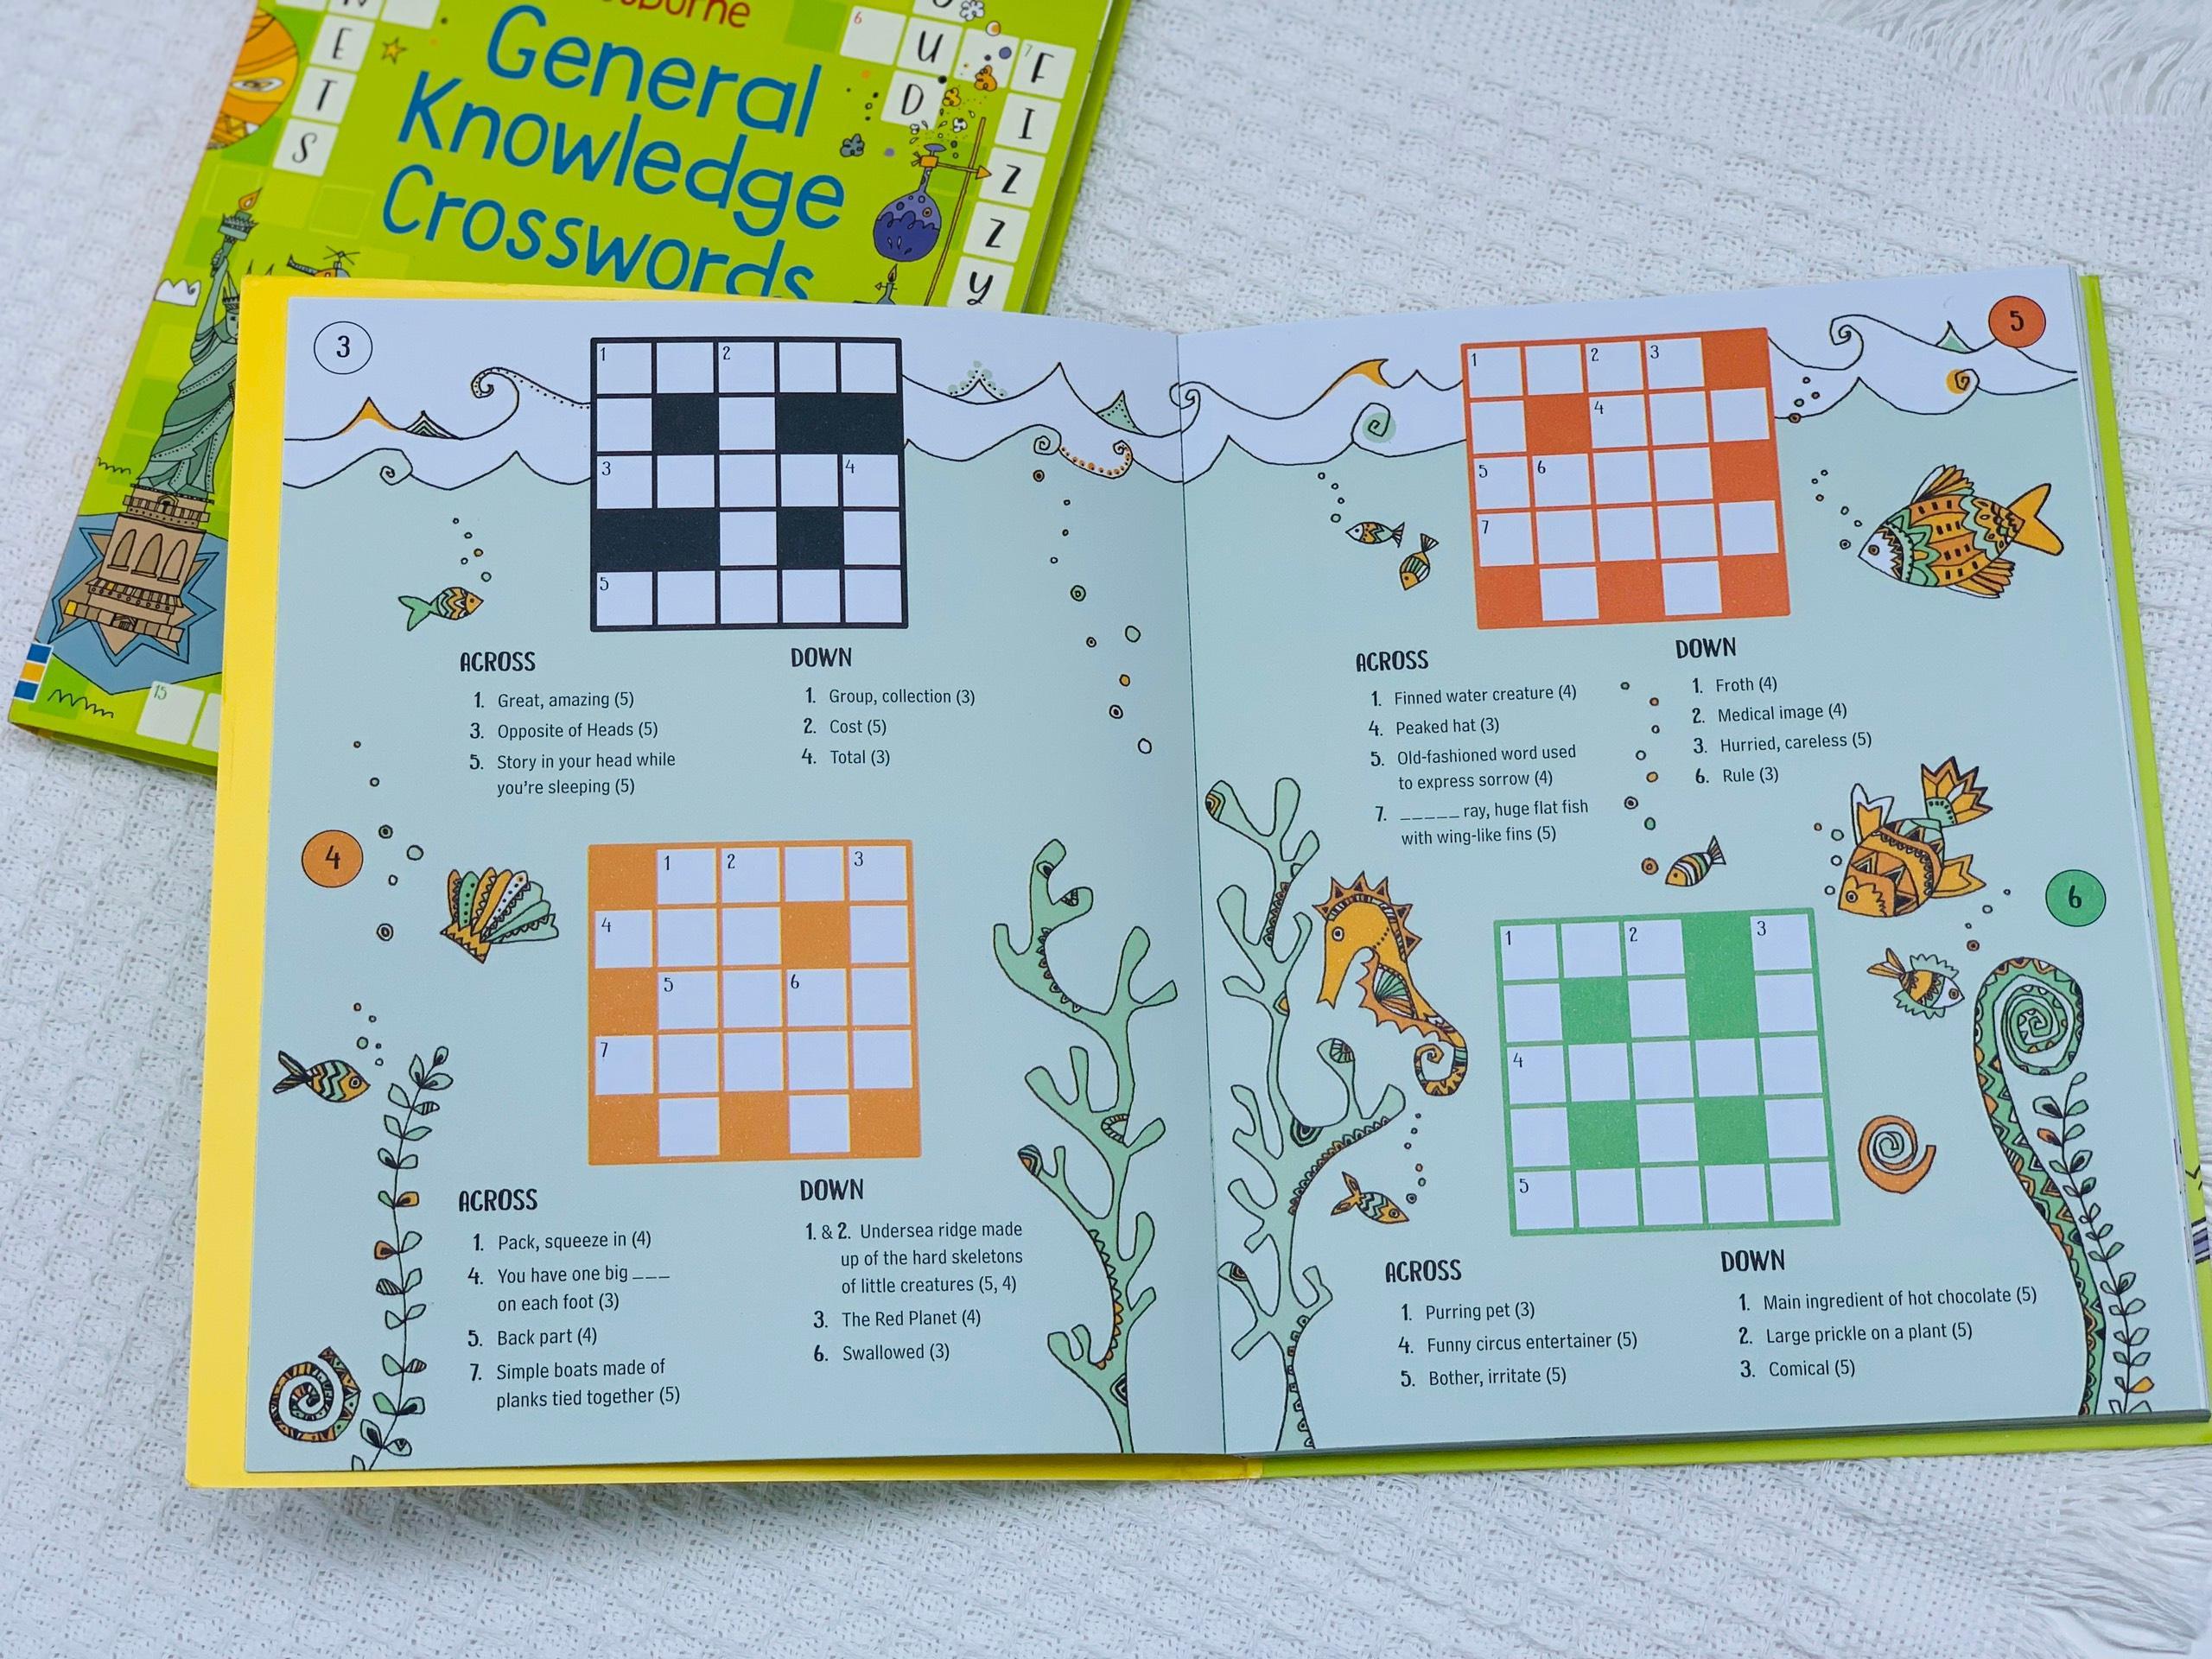 General Knowledge Crosswords (New)